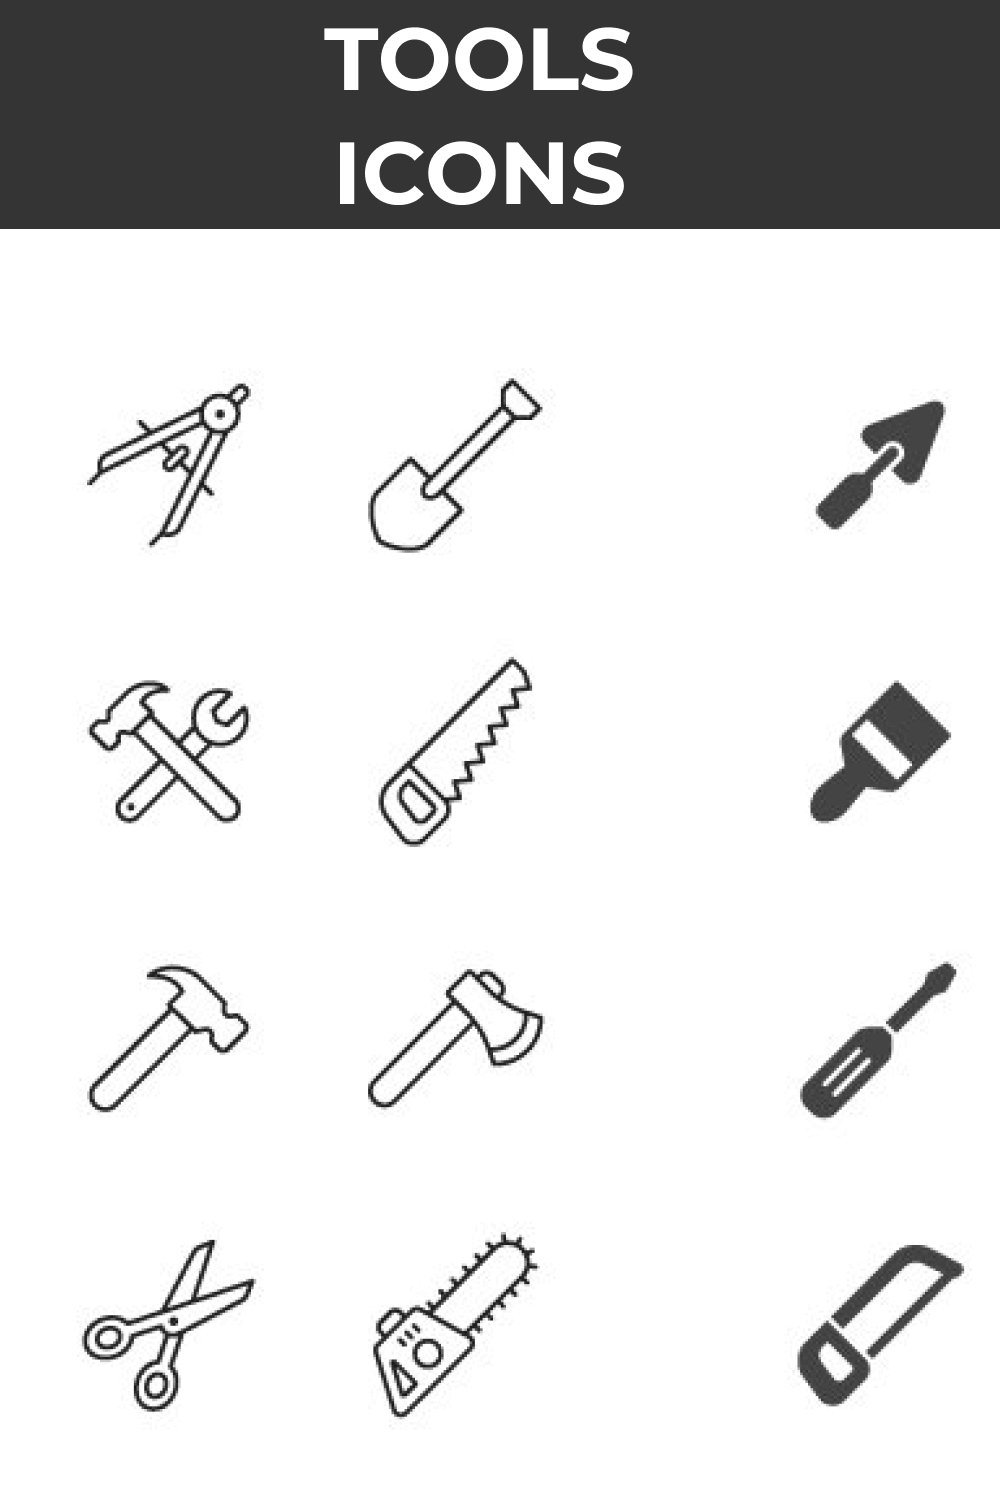 Black tools icons on white background.